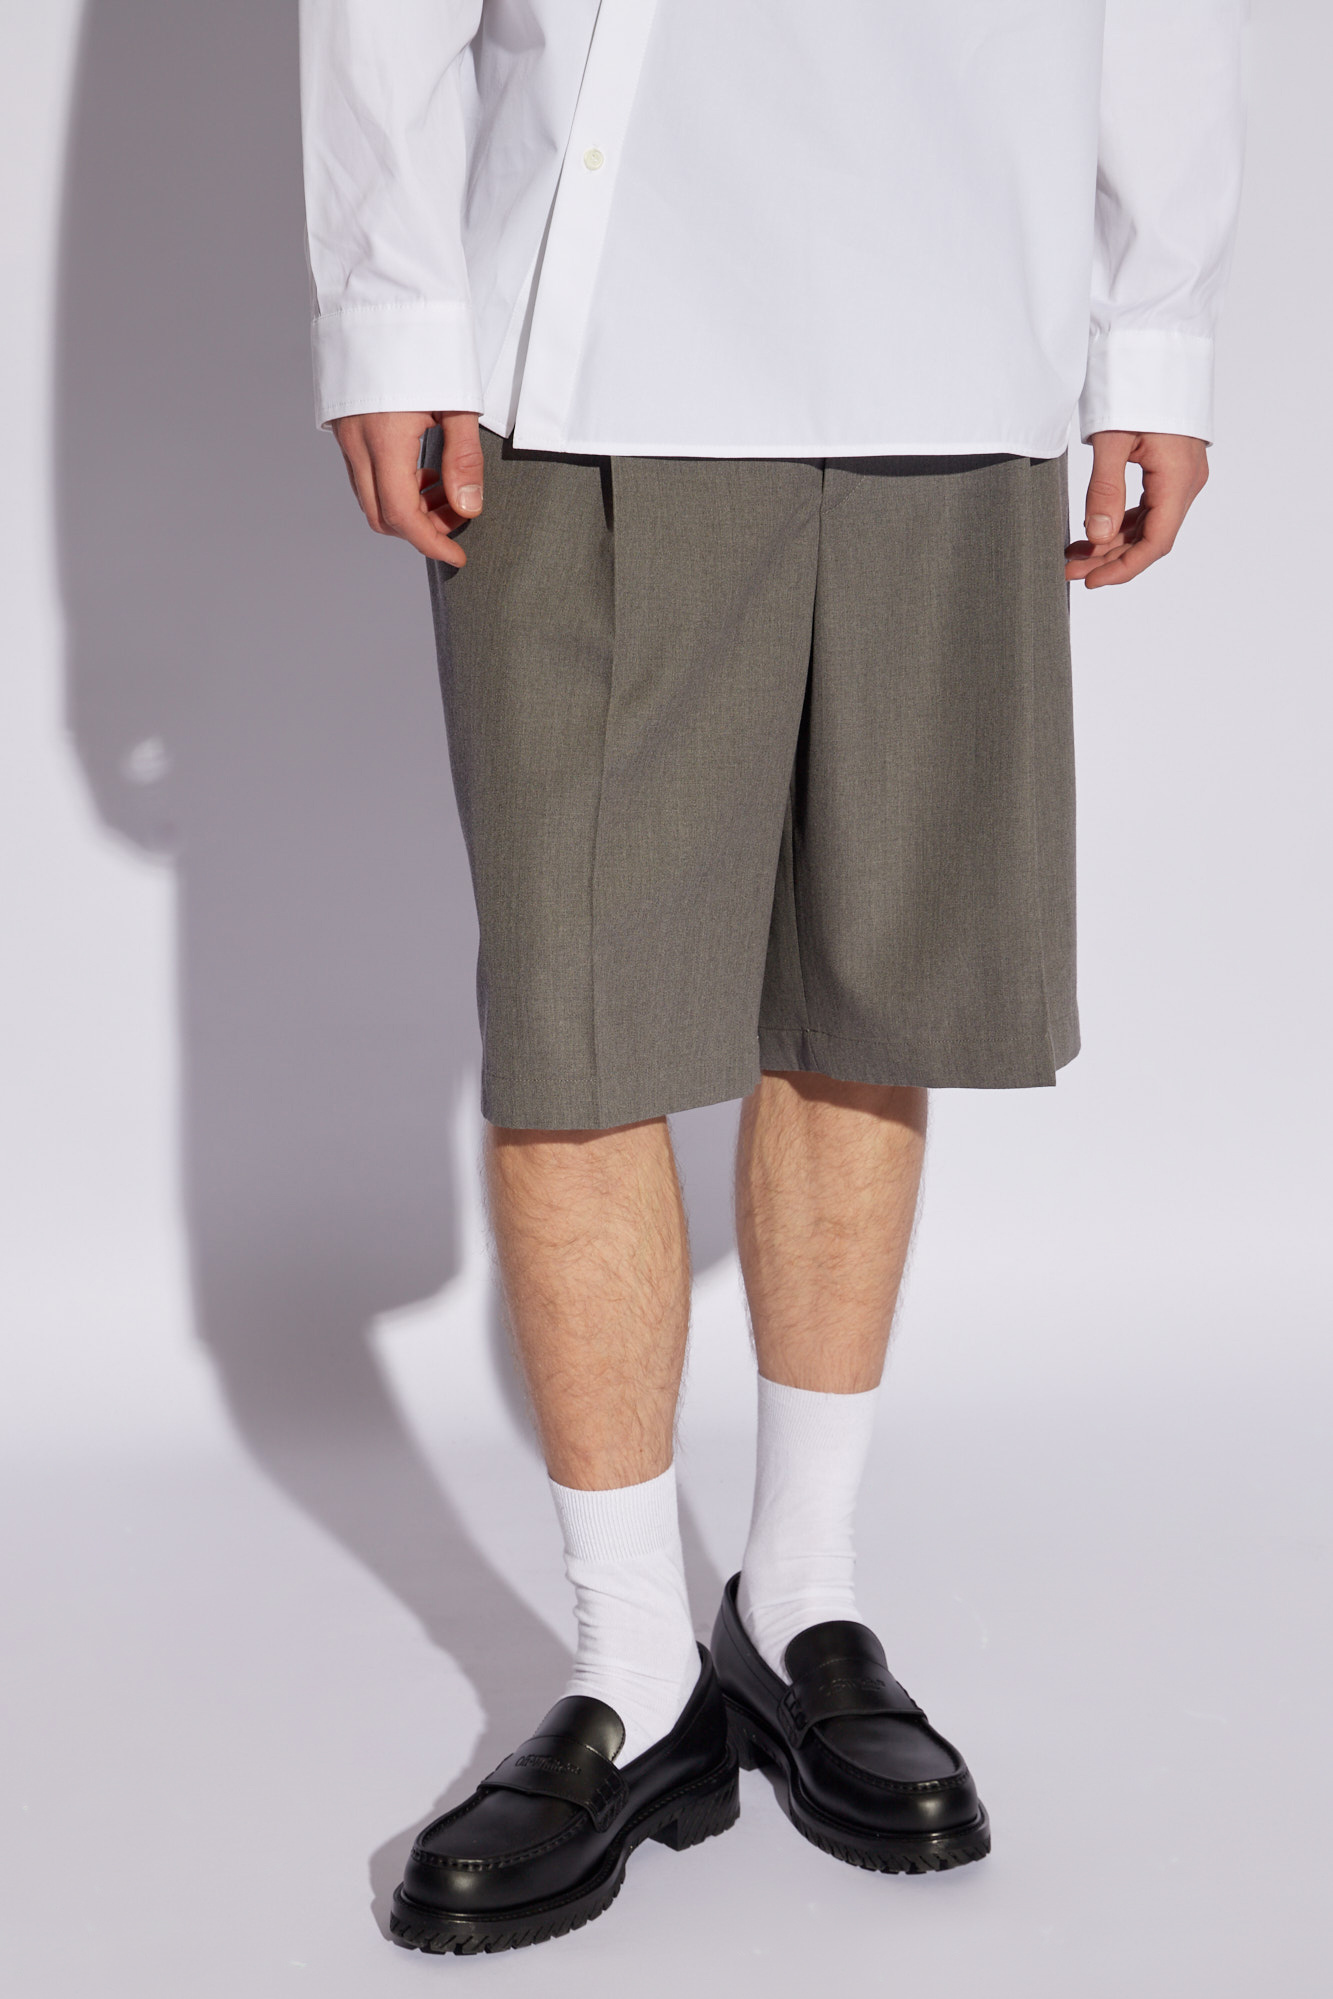 Jacquemus ‘Salti’ pleat-military-jacket shorts